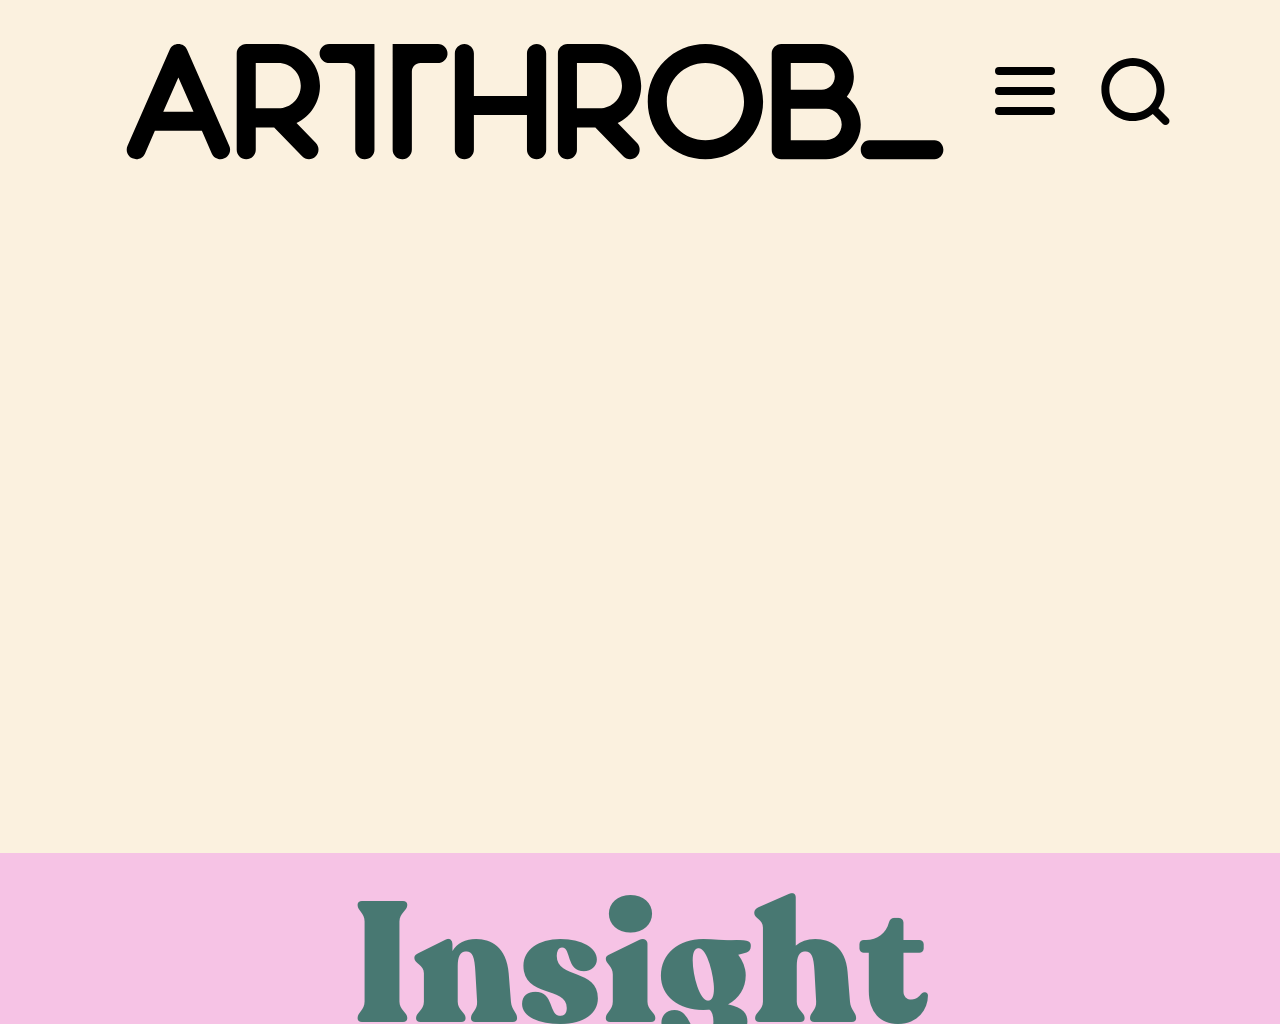 artthrob.co.za